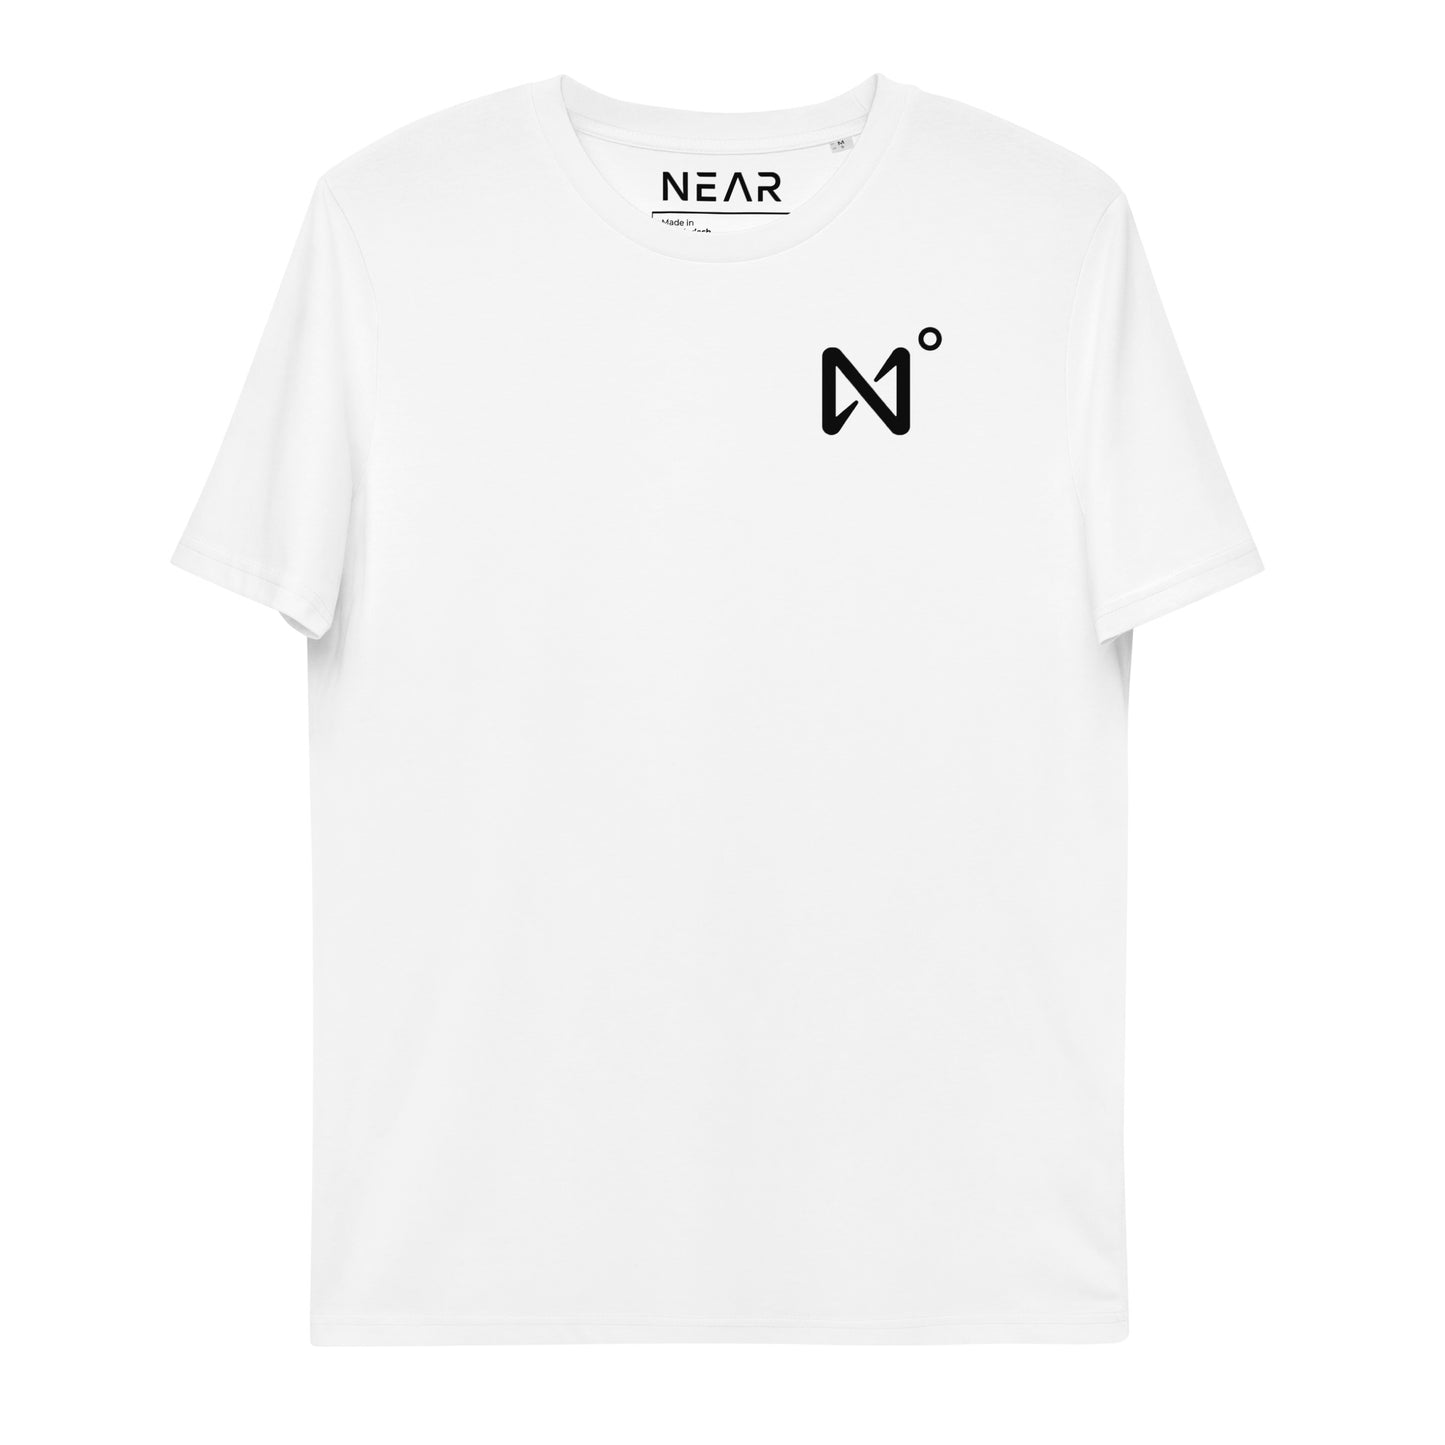 NEAR IS NORTH T-Shirt